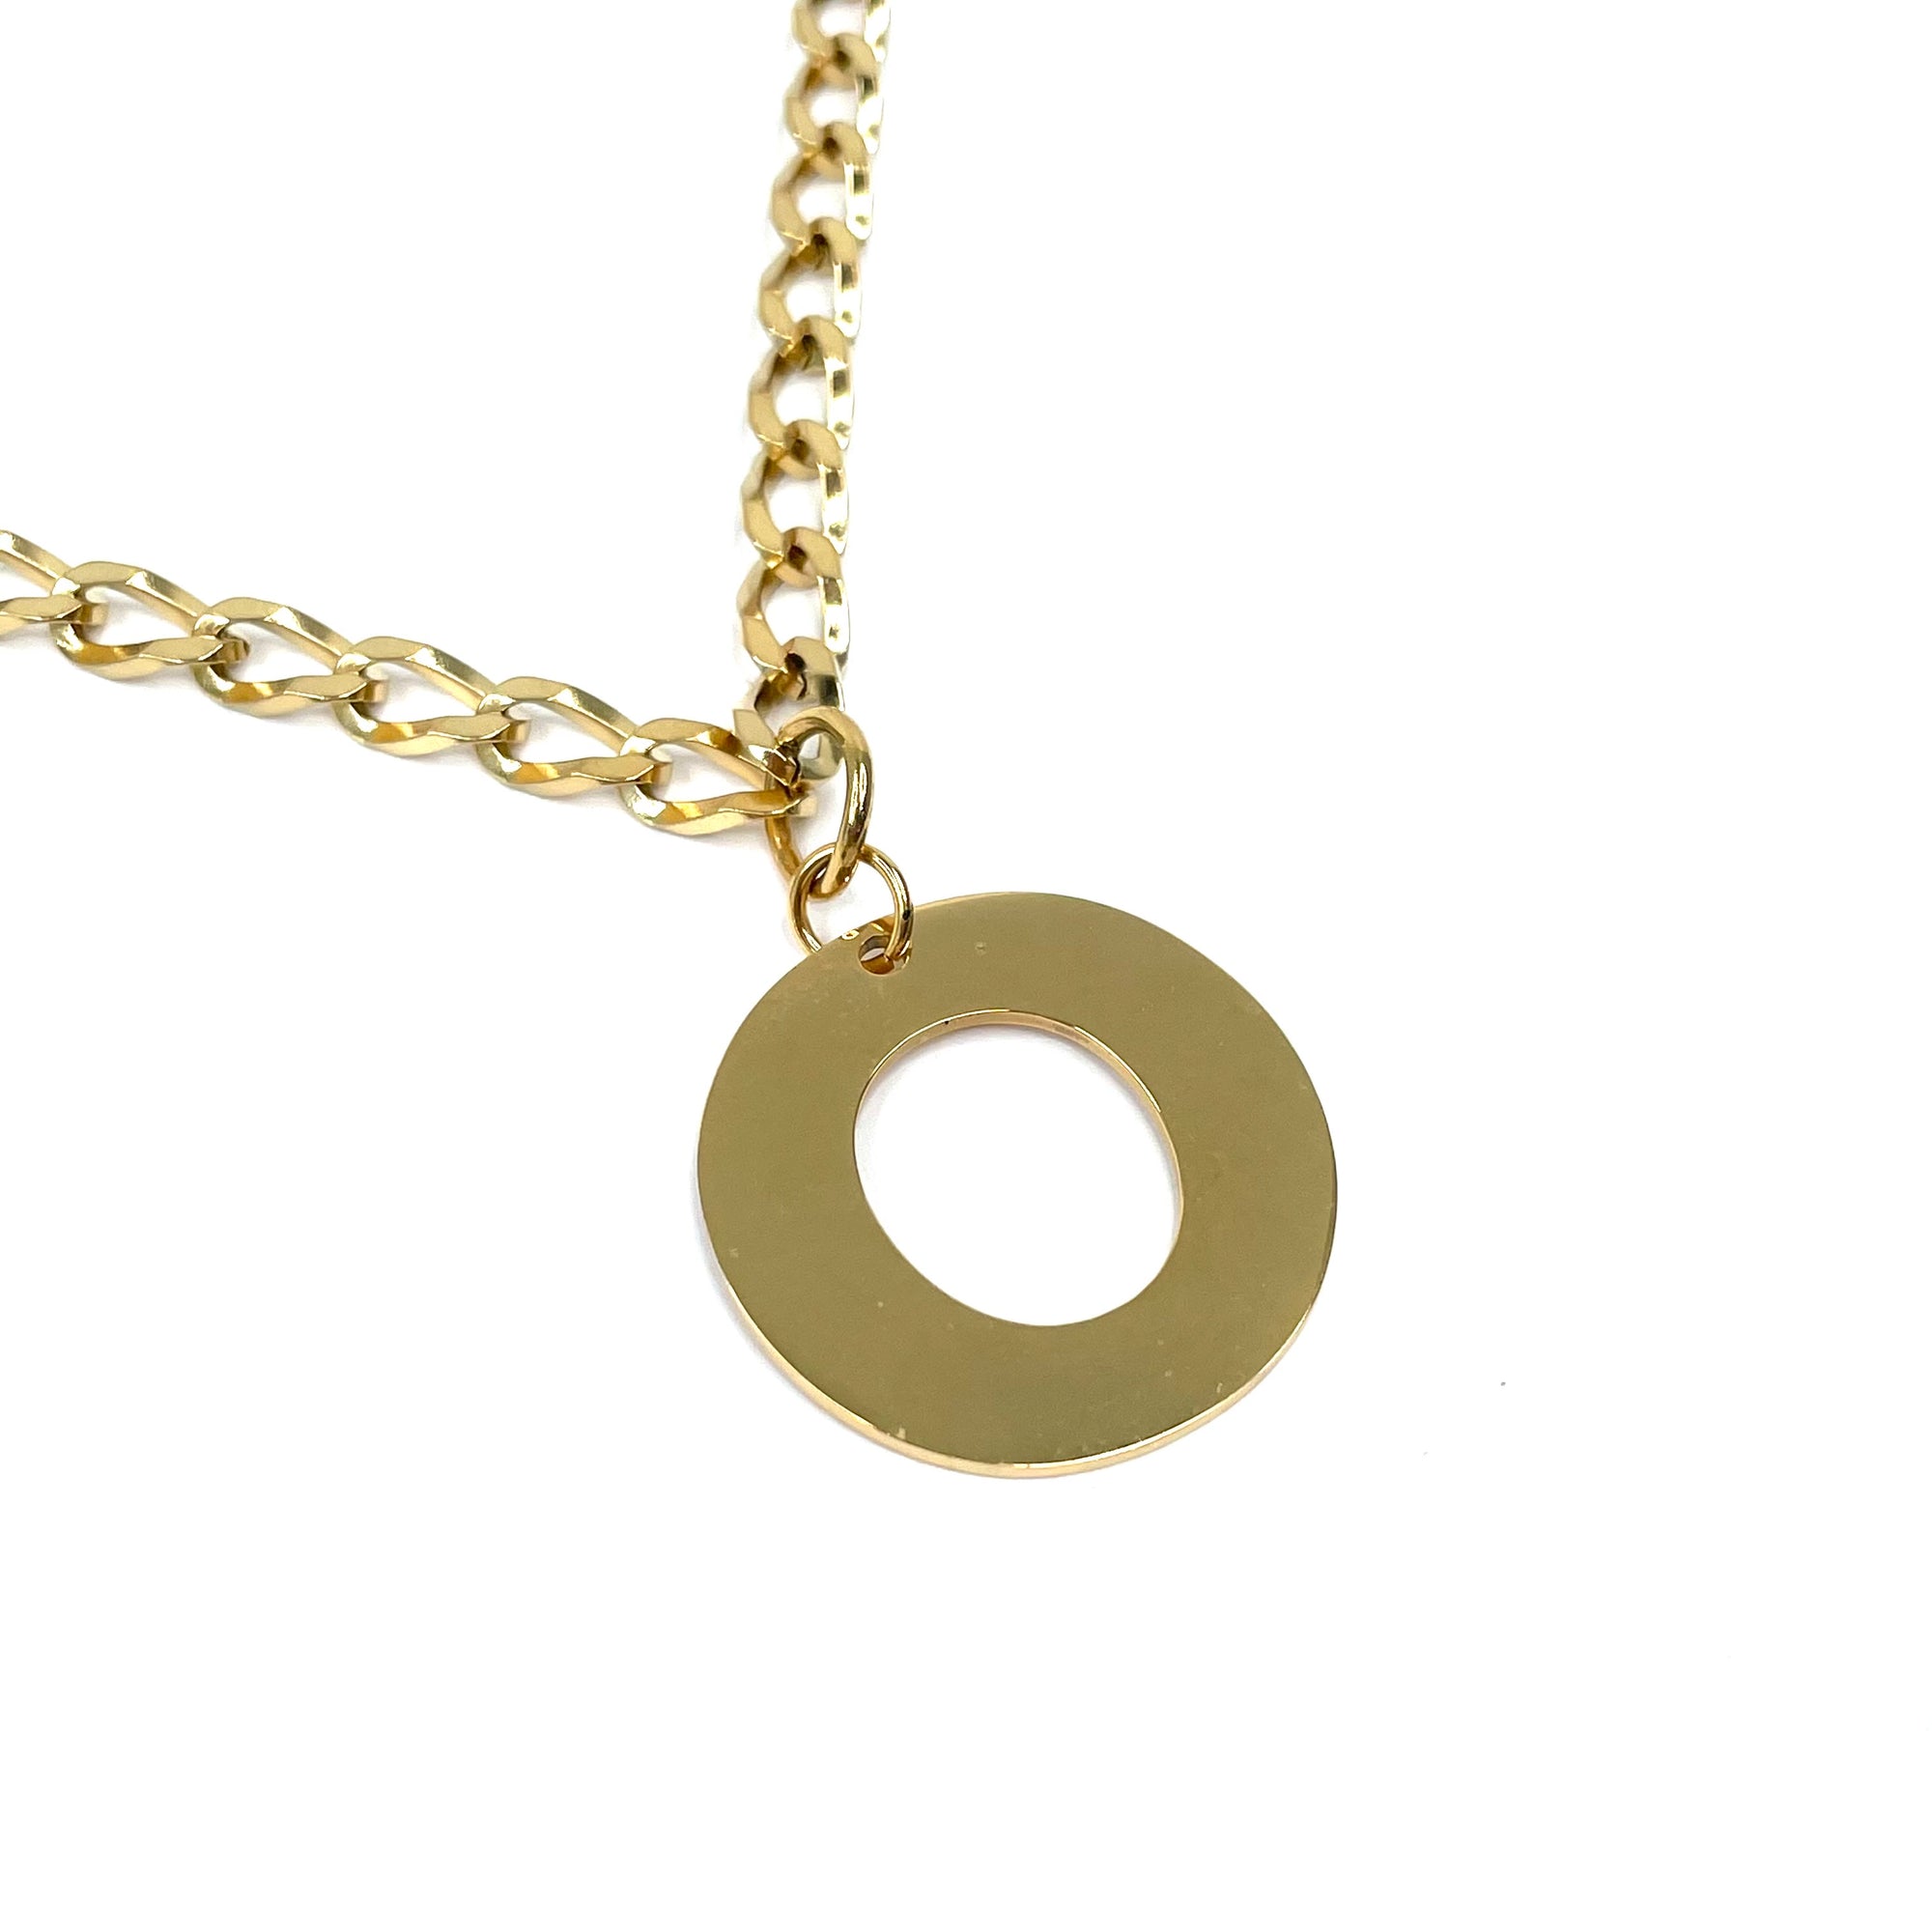 Lettering Legend Necklace Necklaces Cerese D, Inc. Gold O 